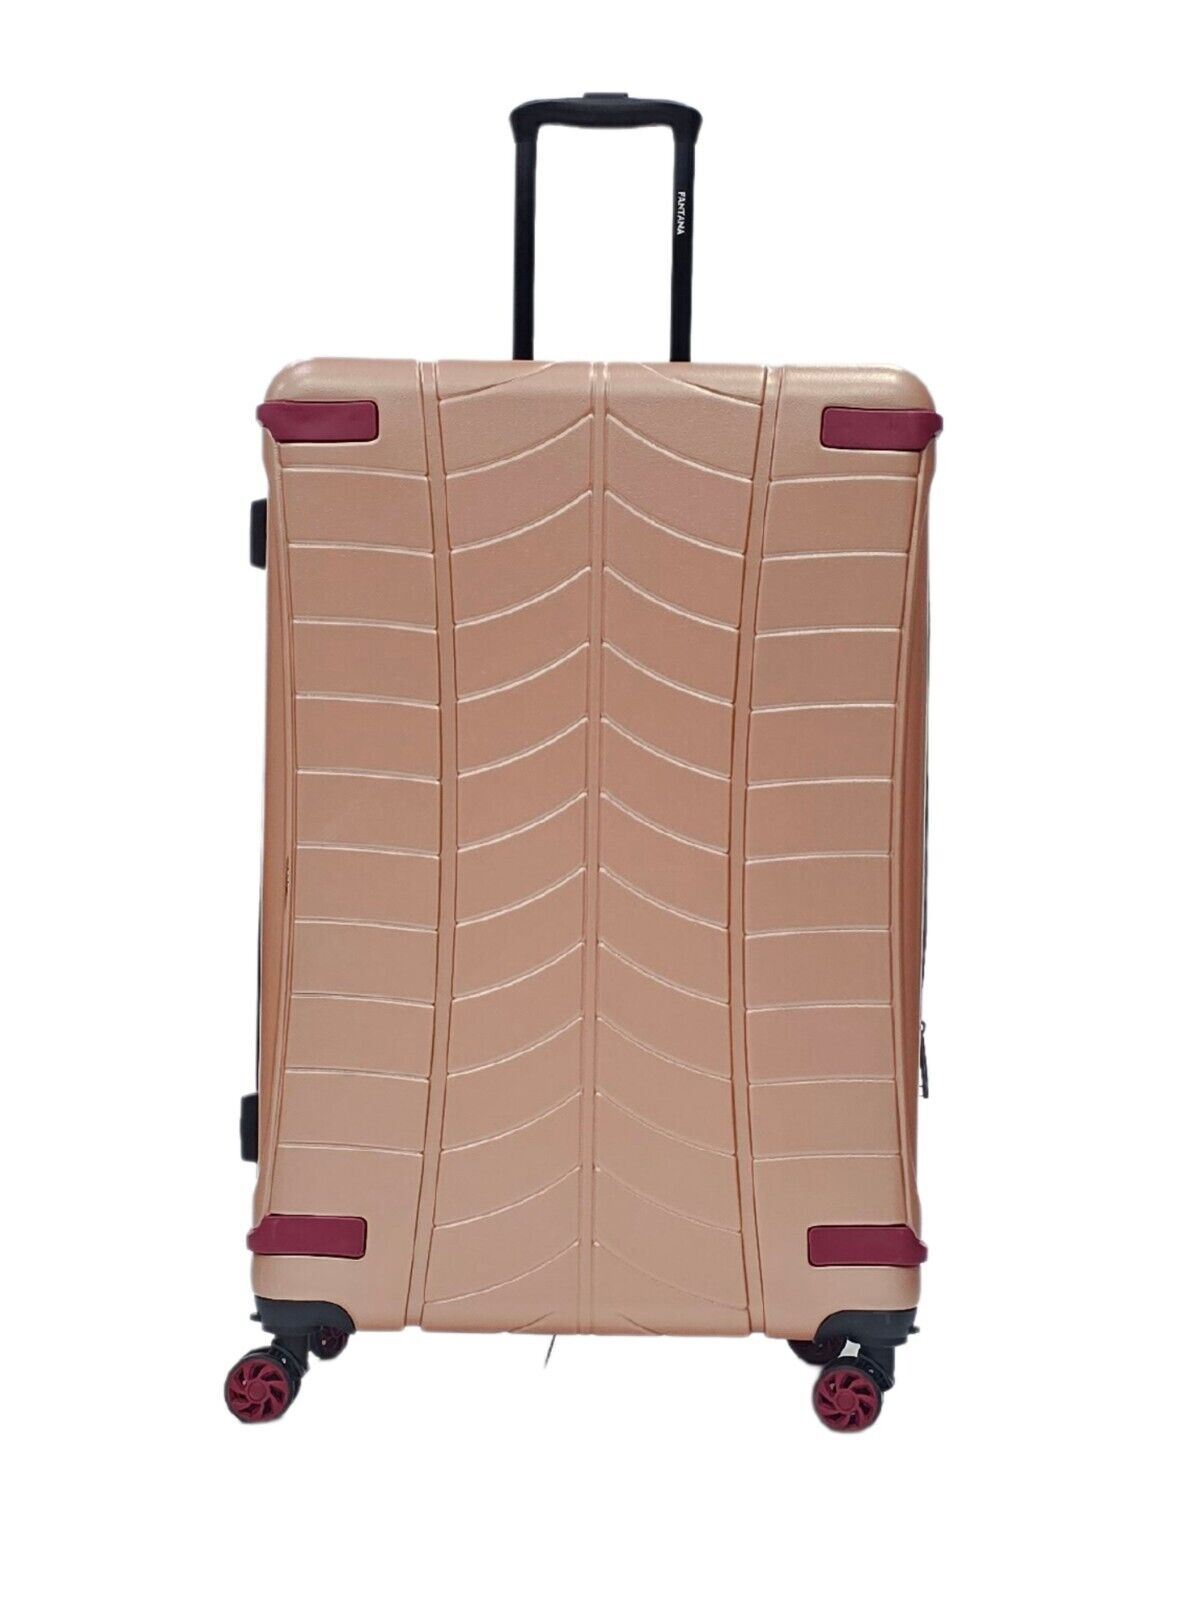 Hard Shell Rose Gold Cabin Suitcase Set 4 Wheel Luggage Travel Bag